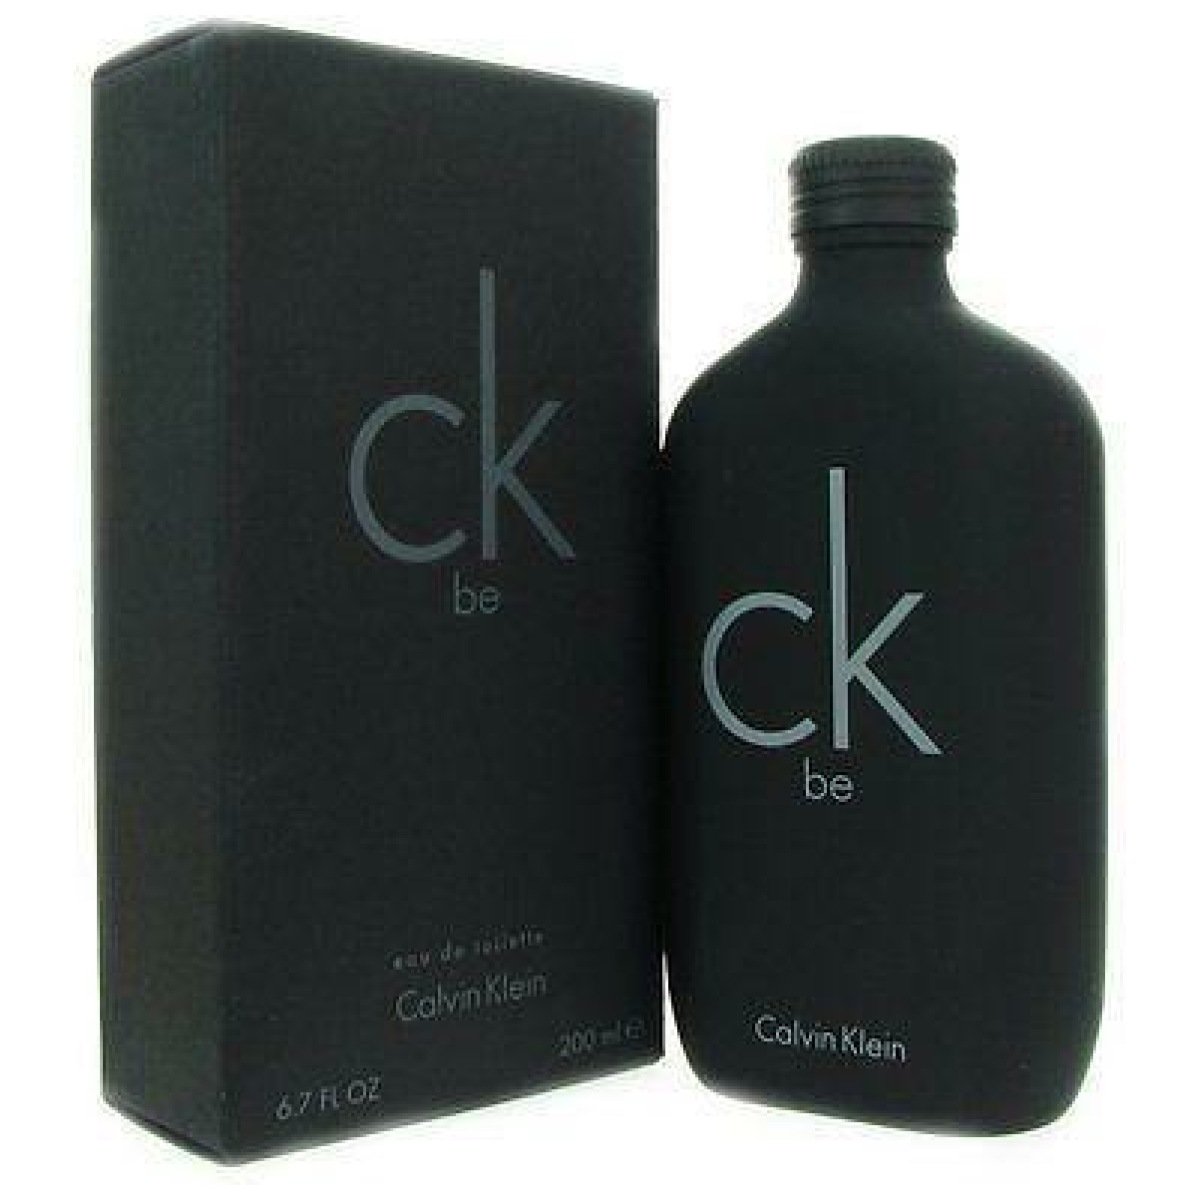 Calvin Klein Be EDT Perfume For Men And Women 200ml